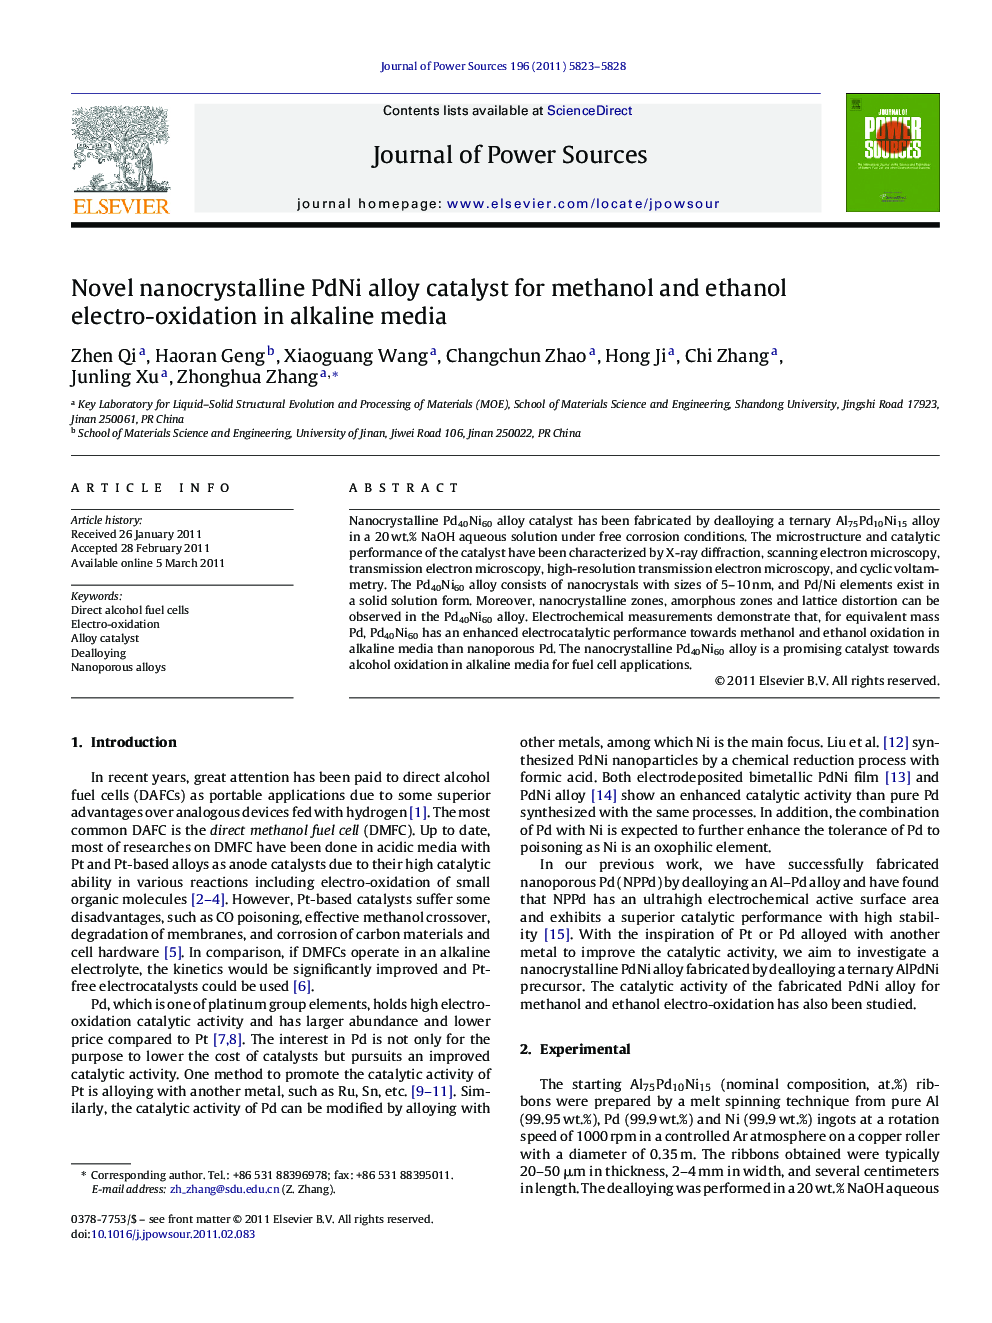 Novel nanocrystalline PdNi alloy catalyst for methanol and ethanol electro-oxidation in alkaline media